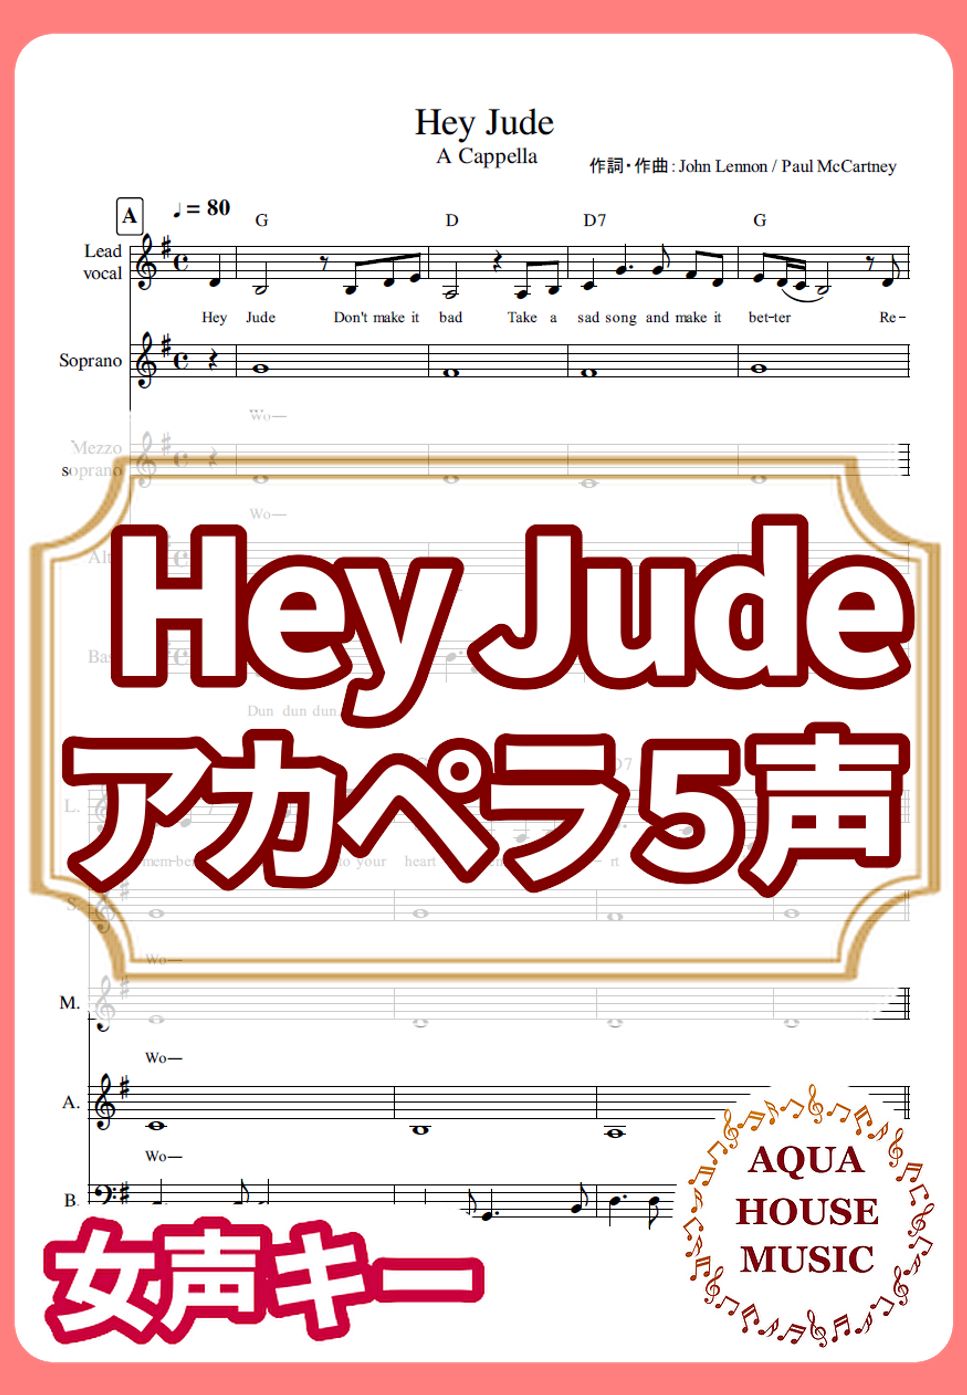 The Beatles - Hey Jude (アカペラ楽譜♪５声ボイパなし) by 飯田 亜紗子